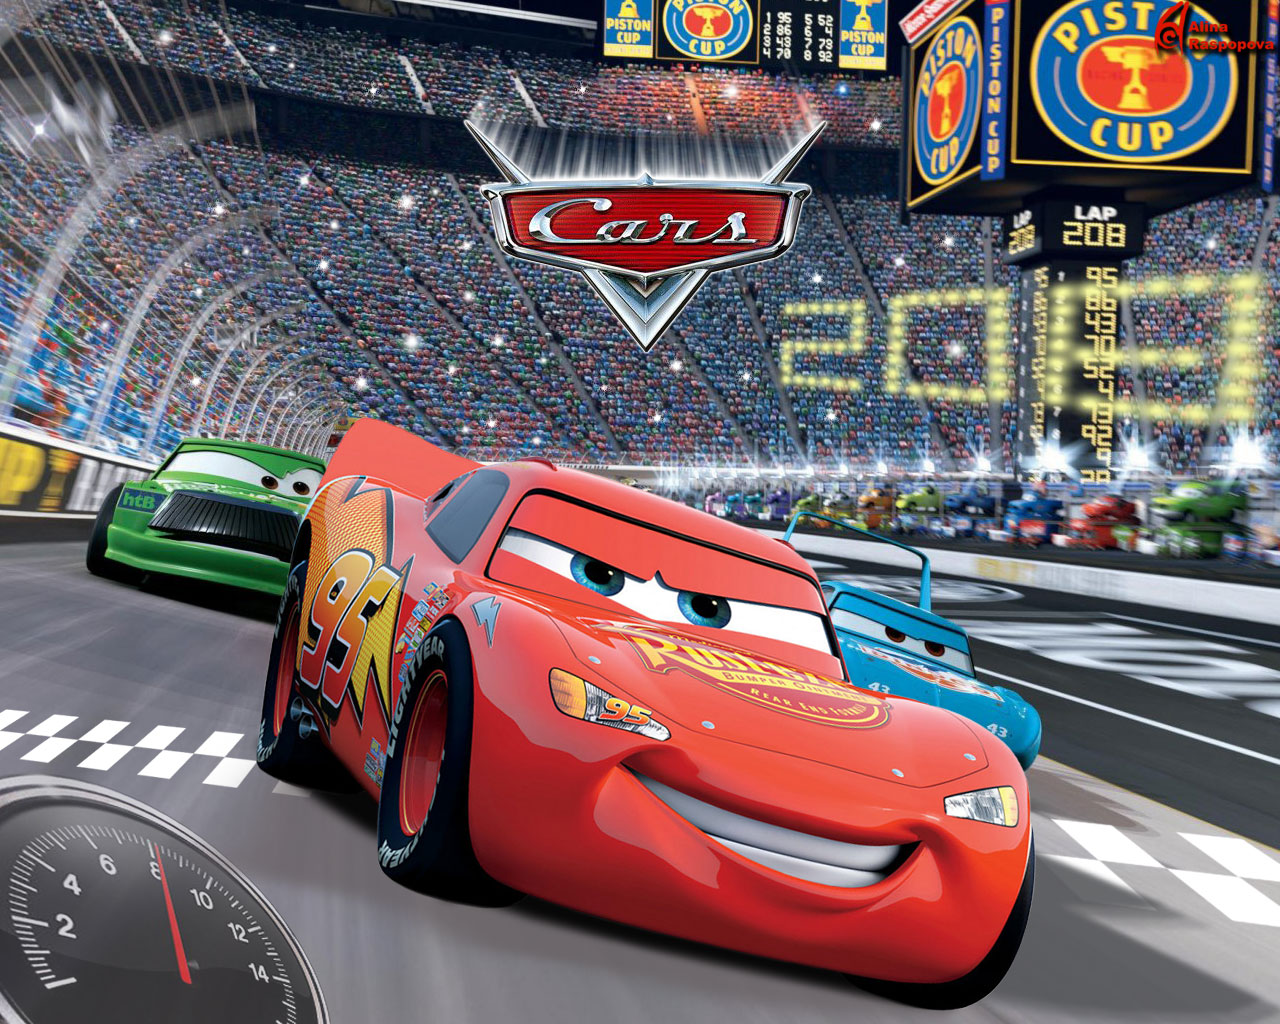 Free download The Cars Movie Wallpaper for Top Desktop Top Desktop No1